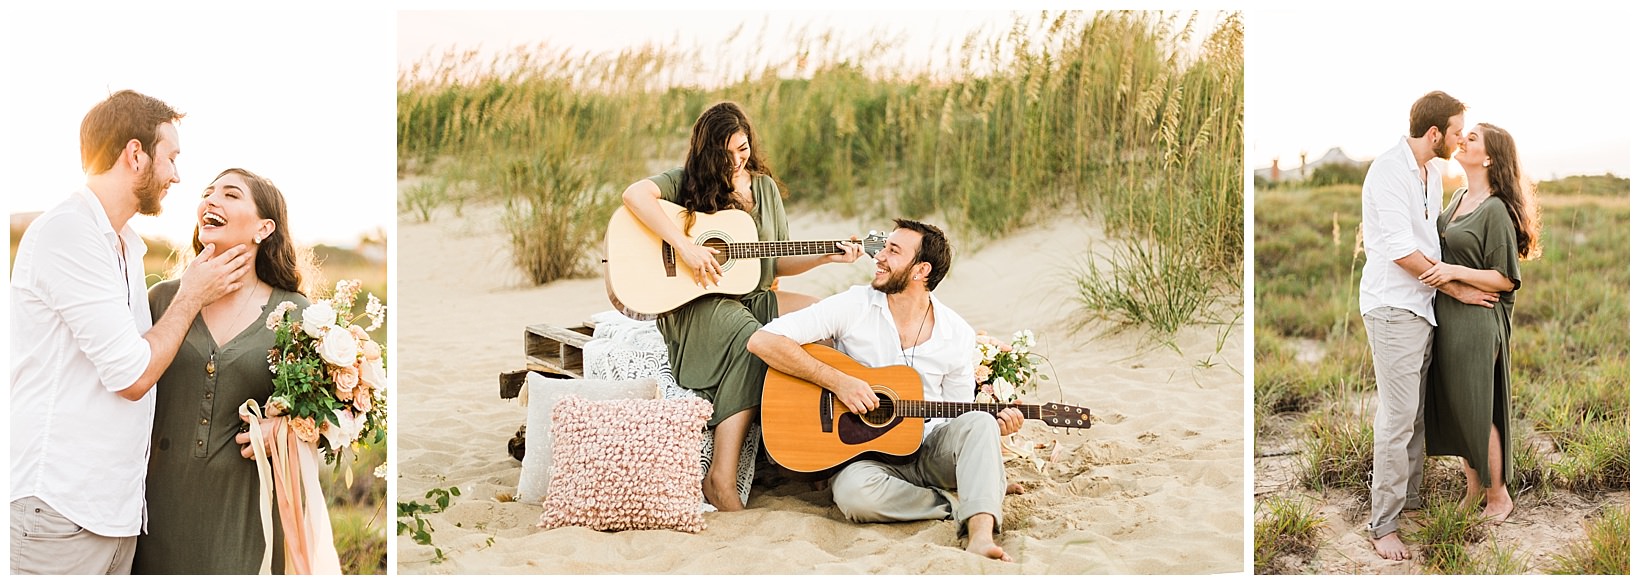 Virginia Beach musician elopement photographer couple inspiration with guitar and green dress